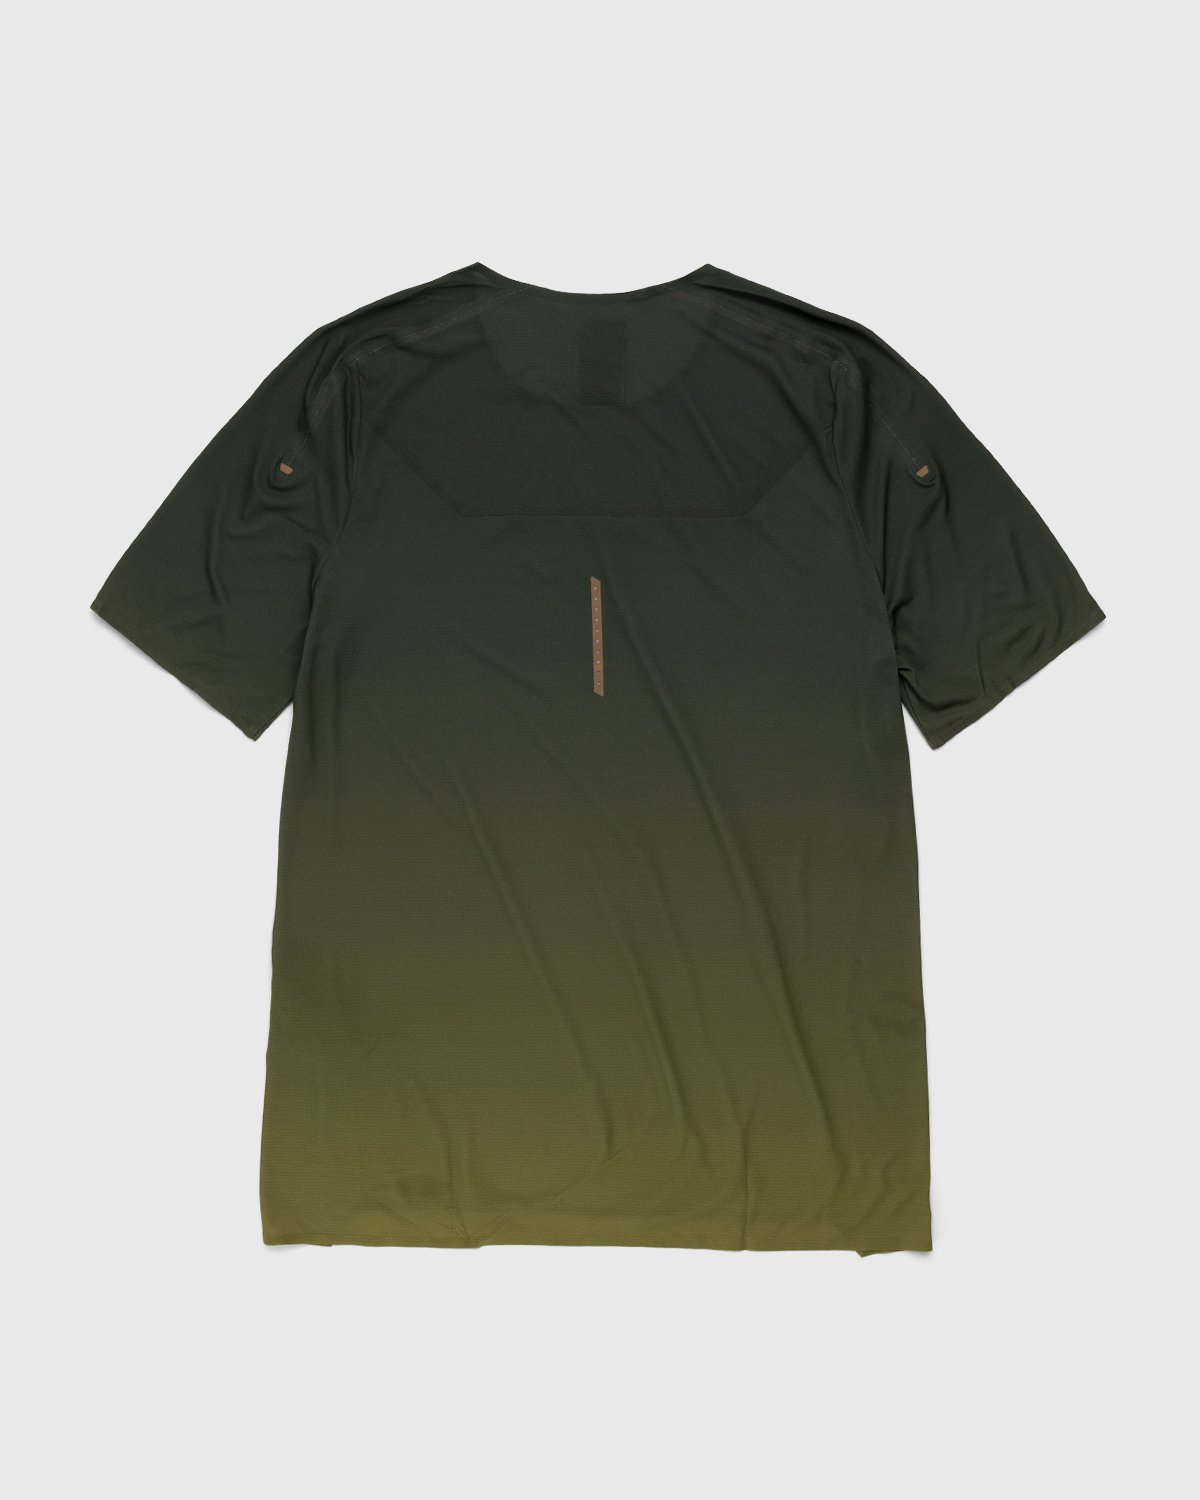 Loewe x On - Men's Performance T-Shirt Gradient Khaki - Clothing - Orange - Image 2